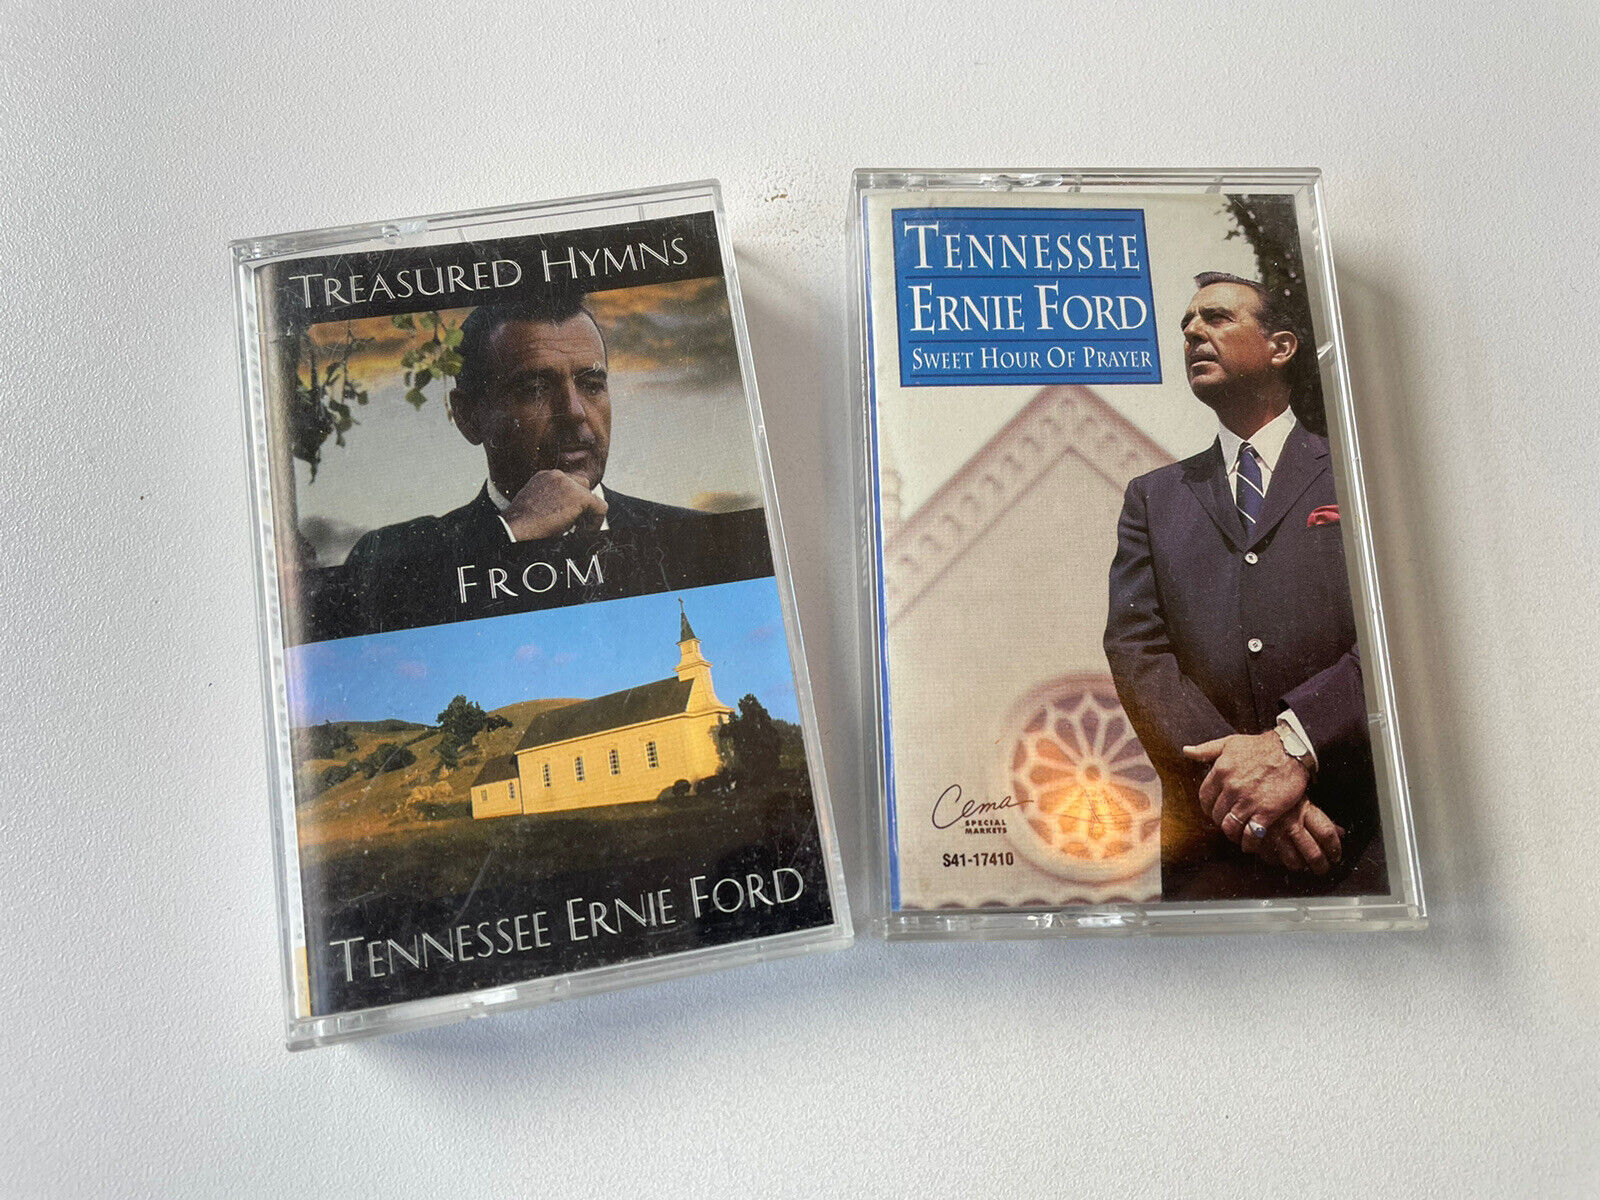 Vintage Tennessee Ernie Ford Audio Cassettes Treasured Hymns & Sweet Hour Prayer